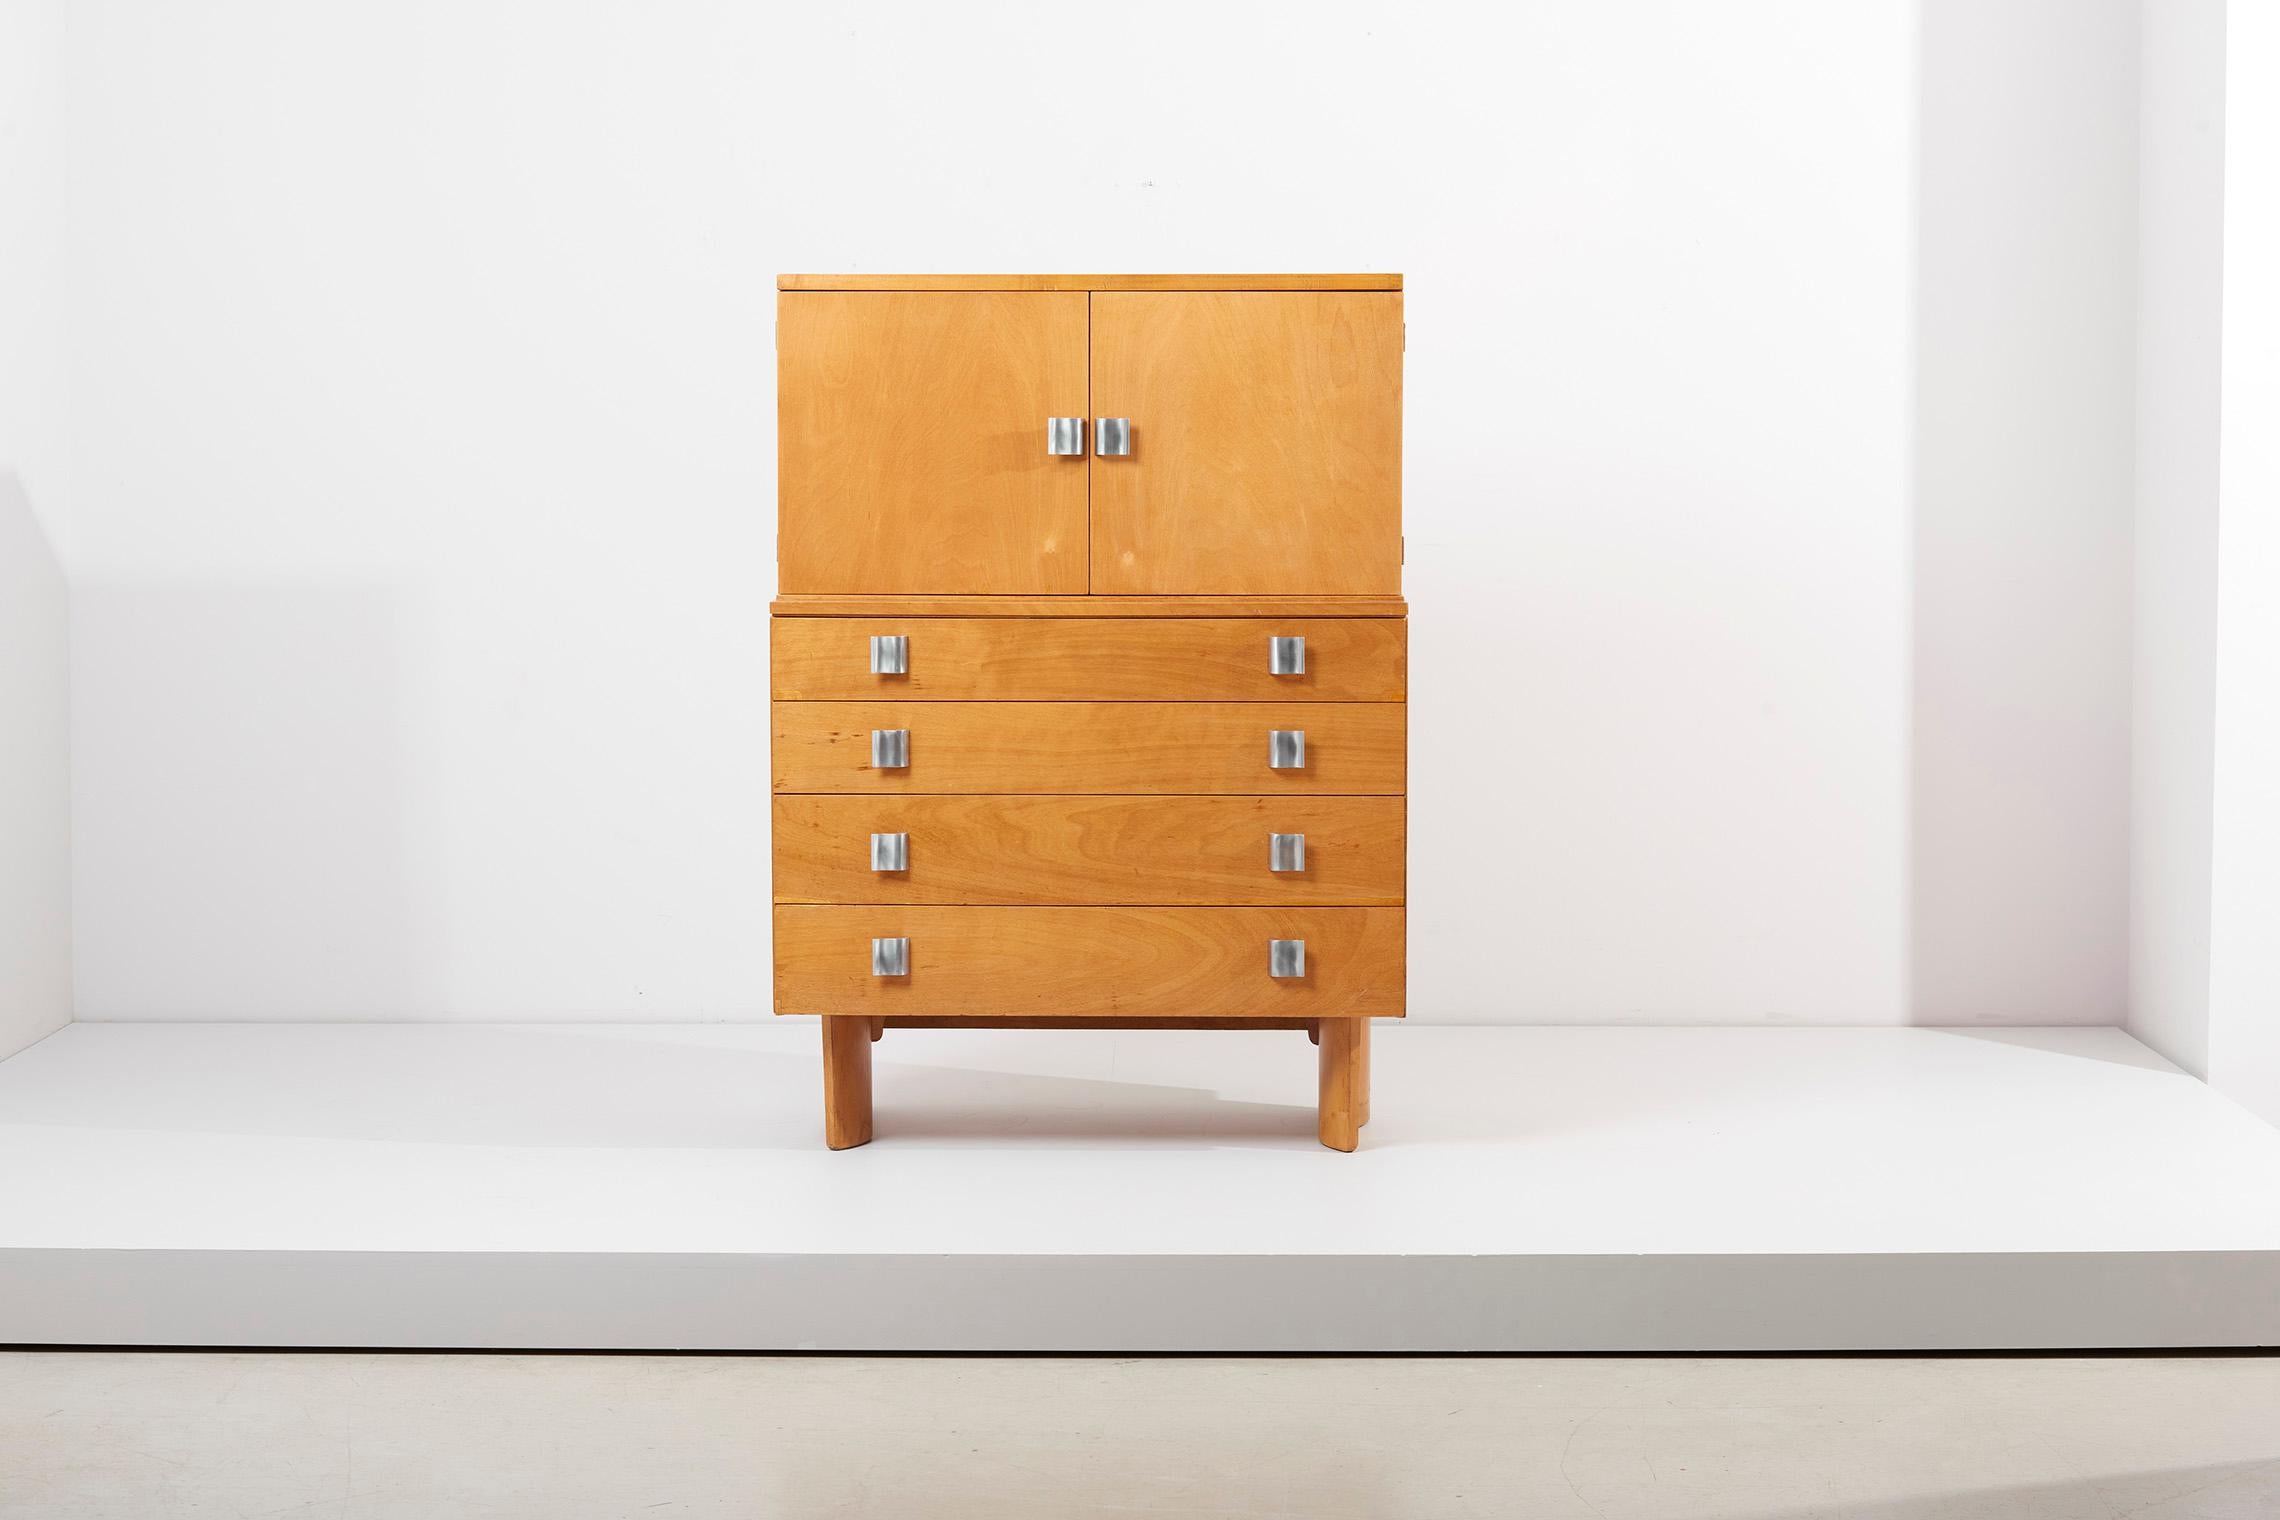 Eliel Saarinen Dresser for Johnson Furniture in Birch, USA - 1960s. Labeled and in Good Condition.